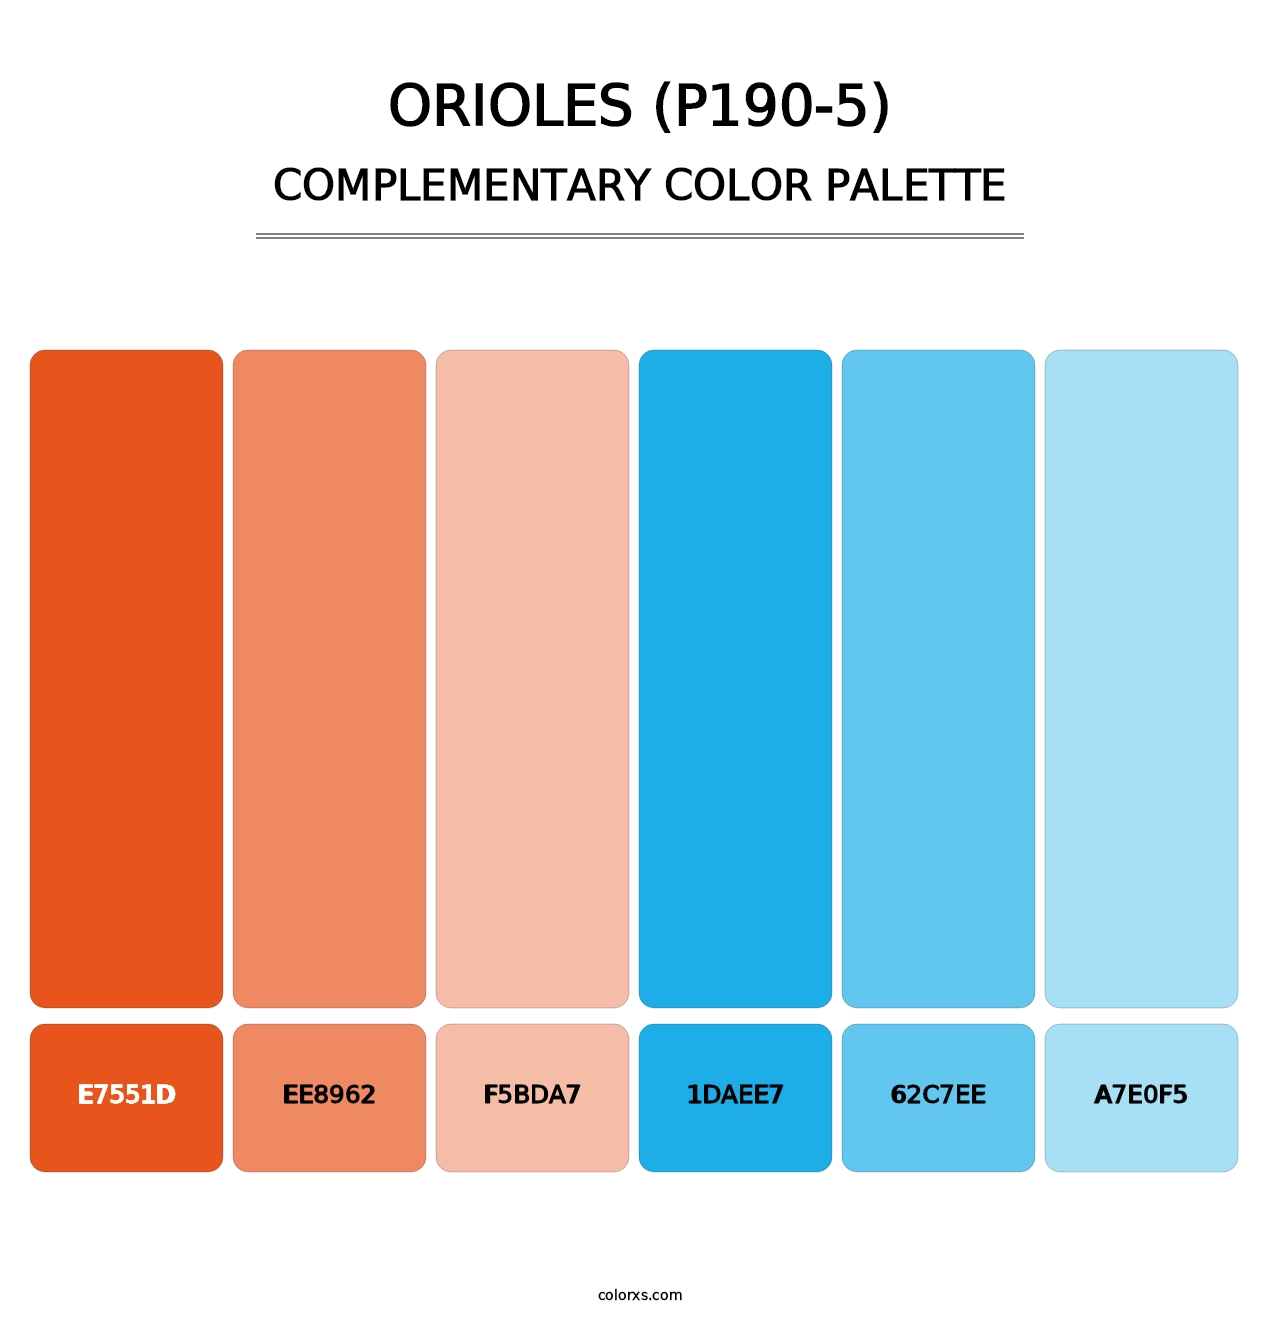 Orioles (P190-5) - Complementary Color Palette